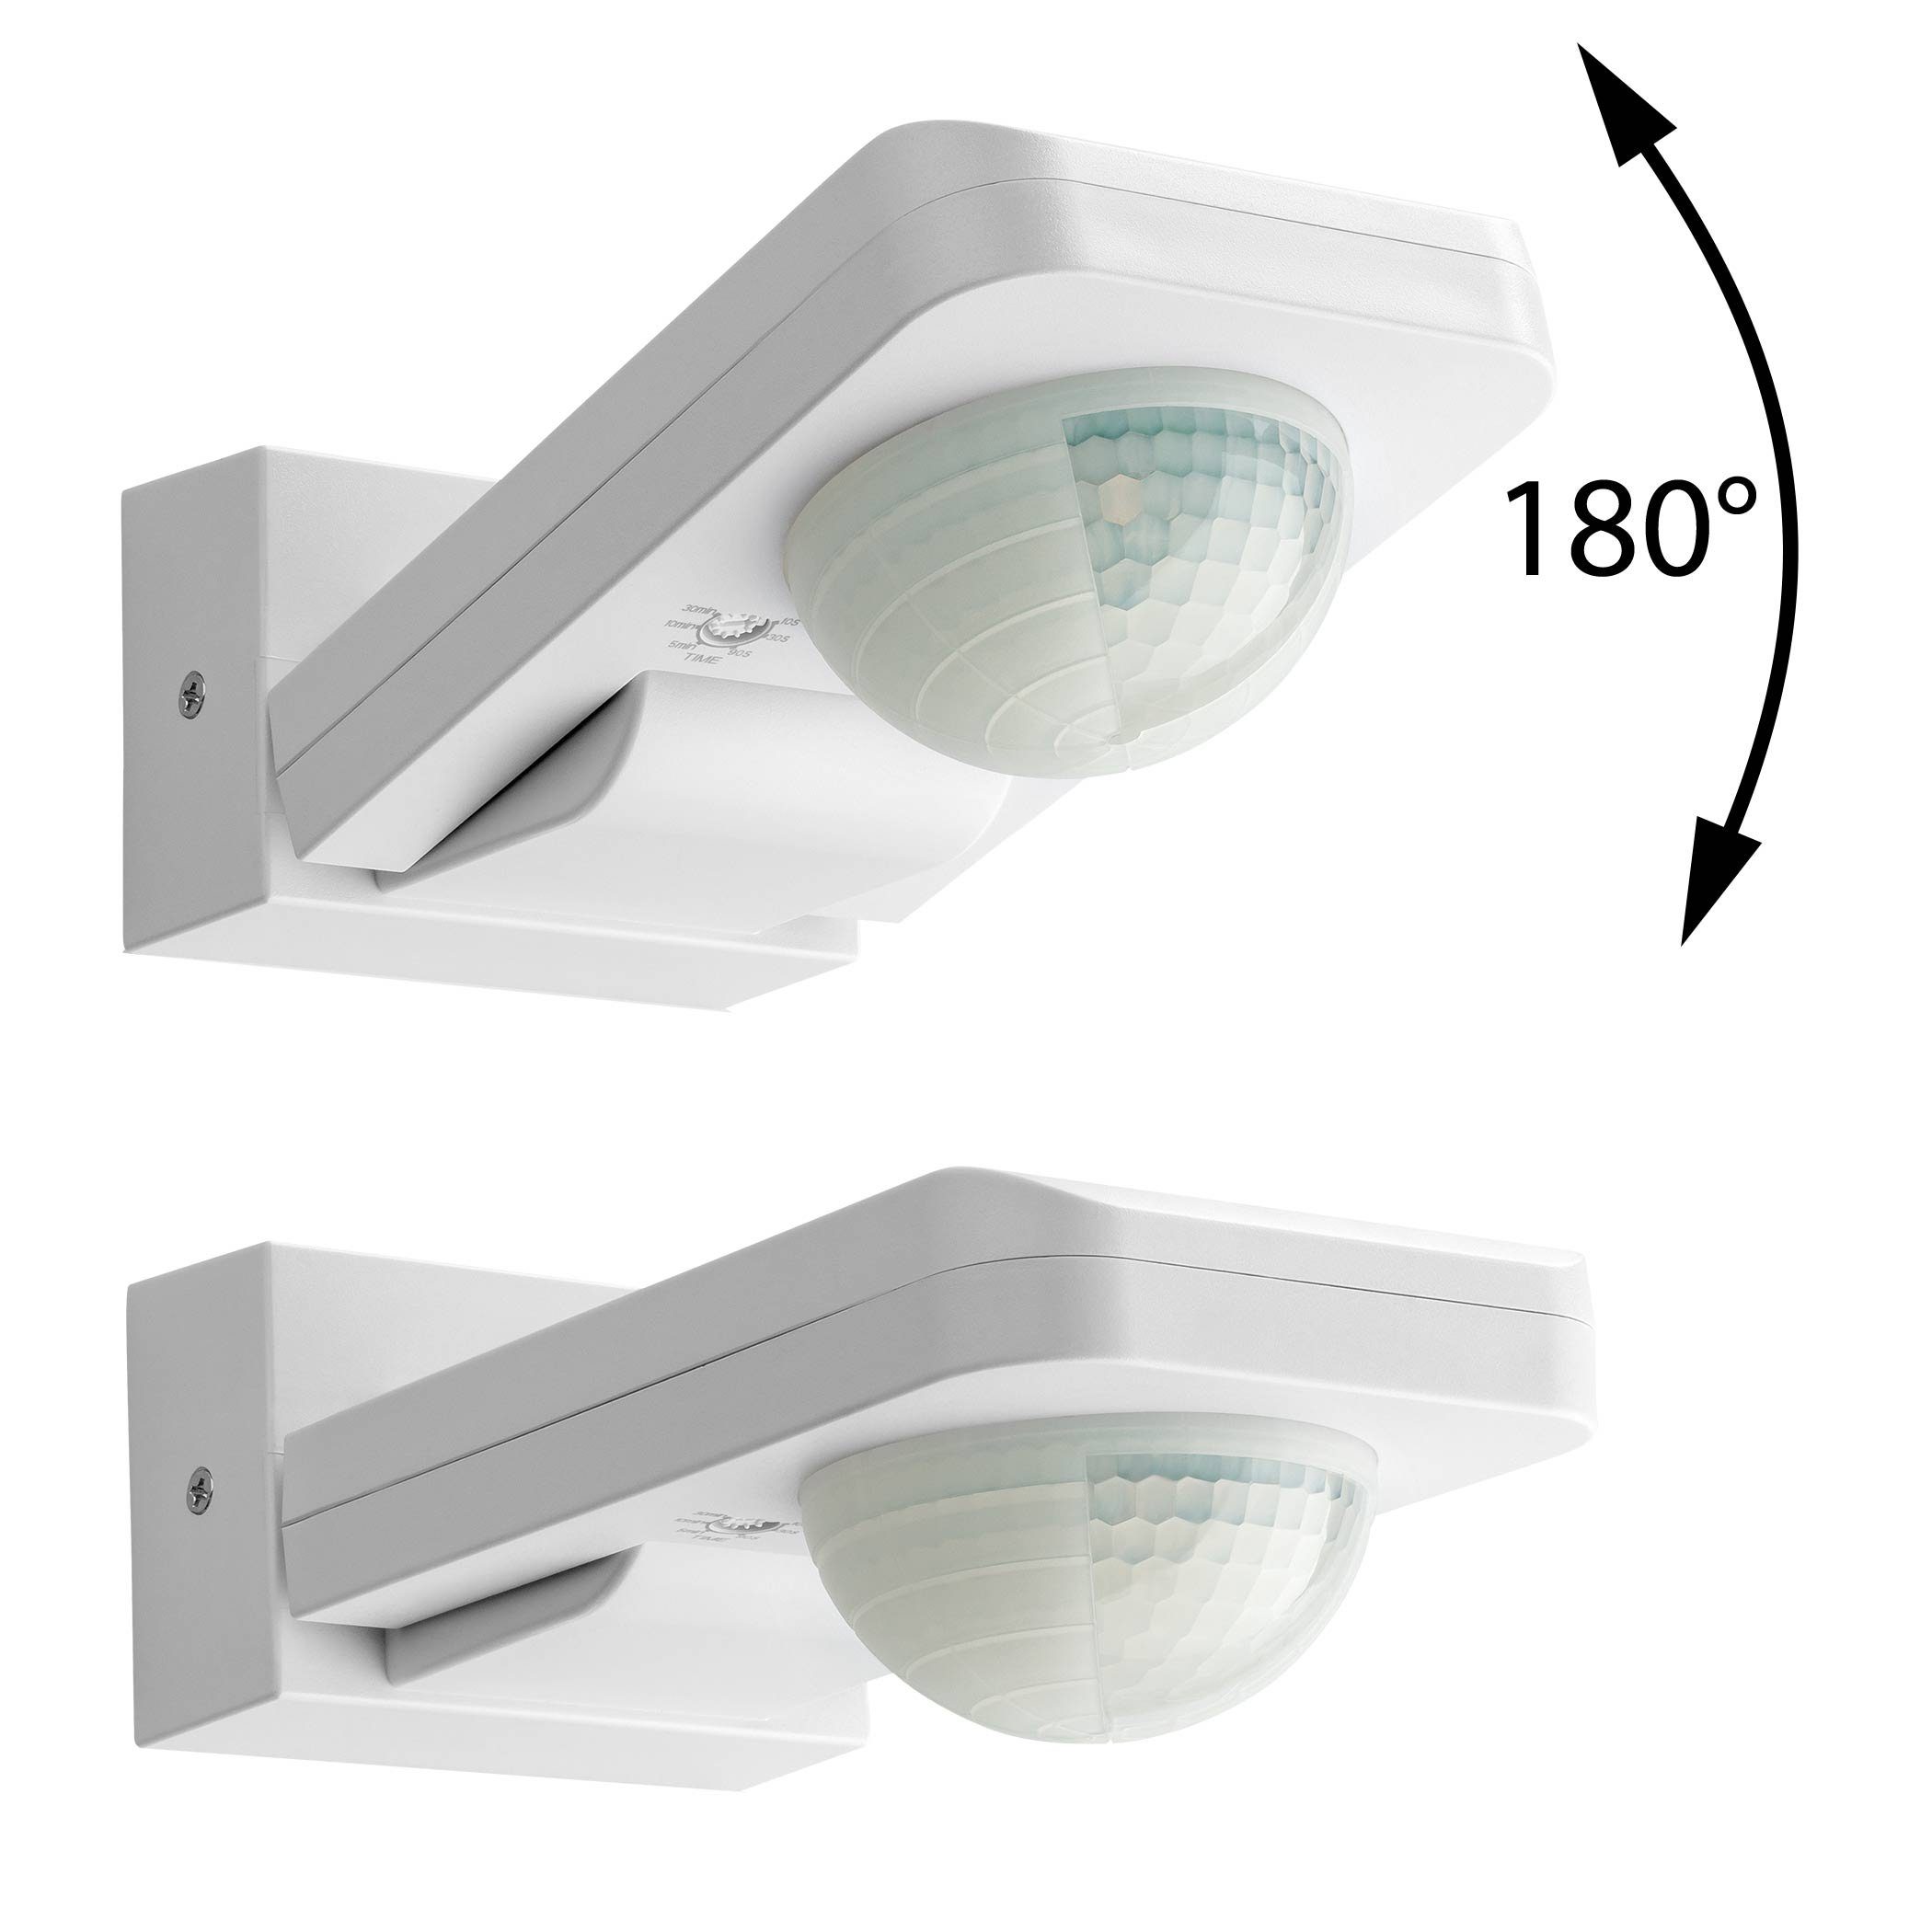 LED geeignet 360°, SEBSON / IP65, Bewegungsmelder Aussen Bewegungsmelder Aufputz, 20m